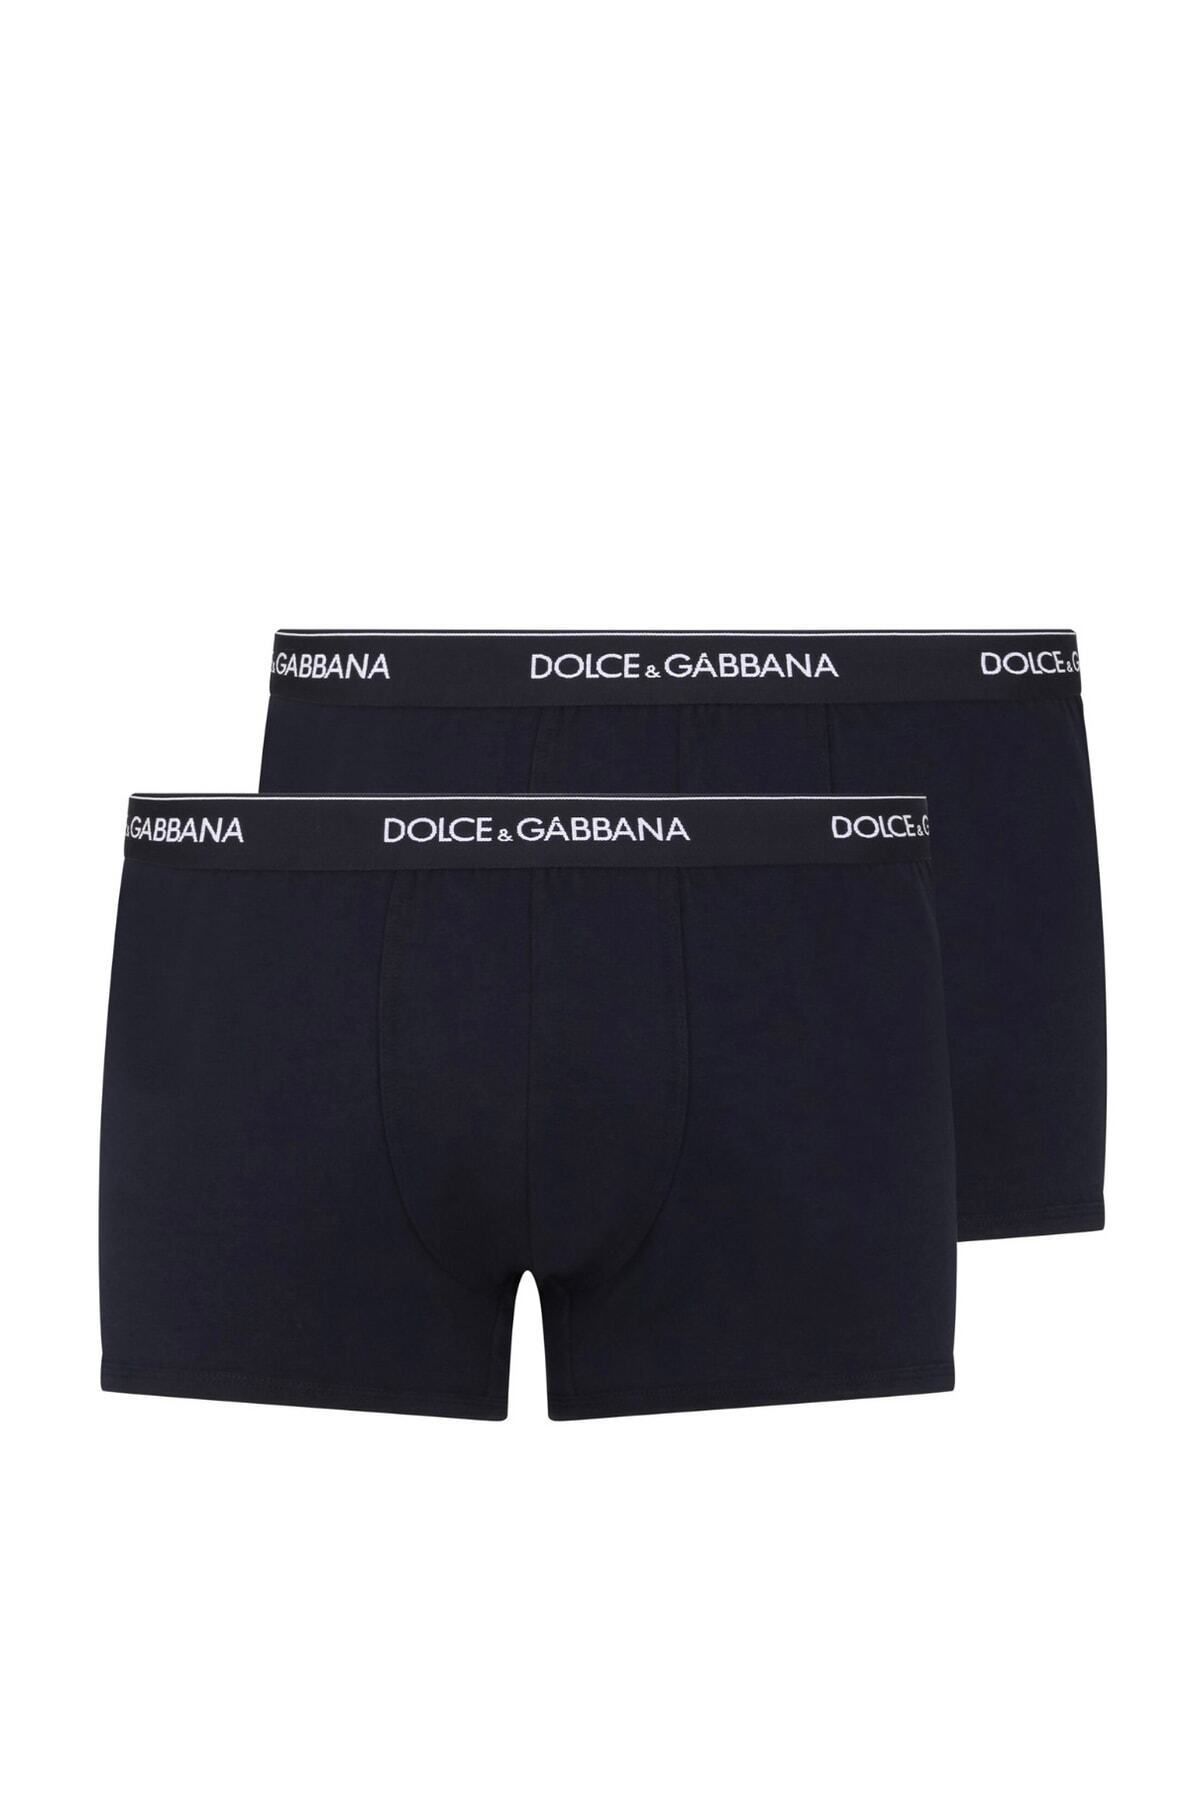 Dolce&Gabbana Logo Boxer Set